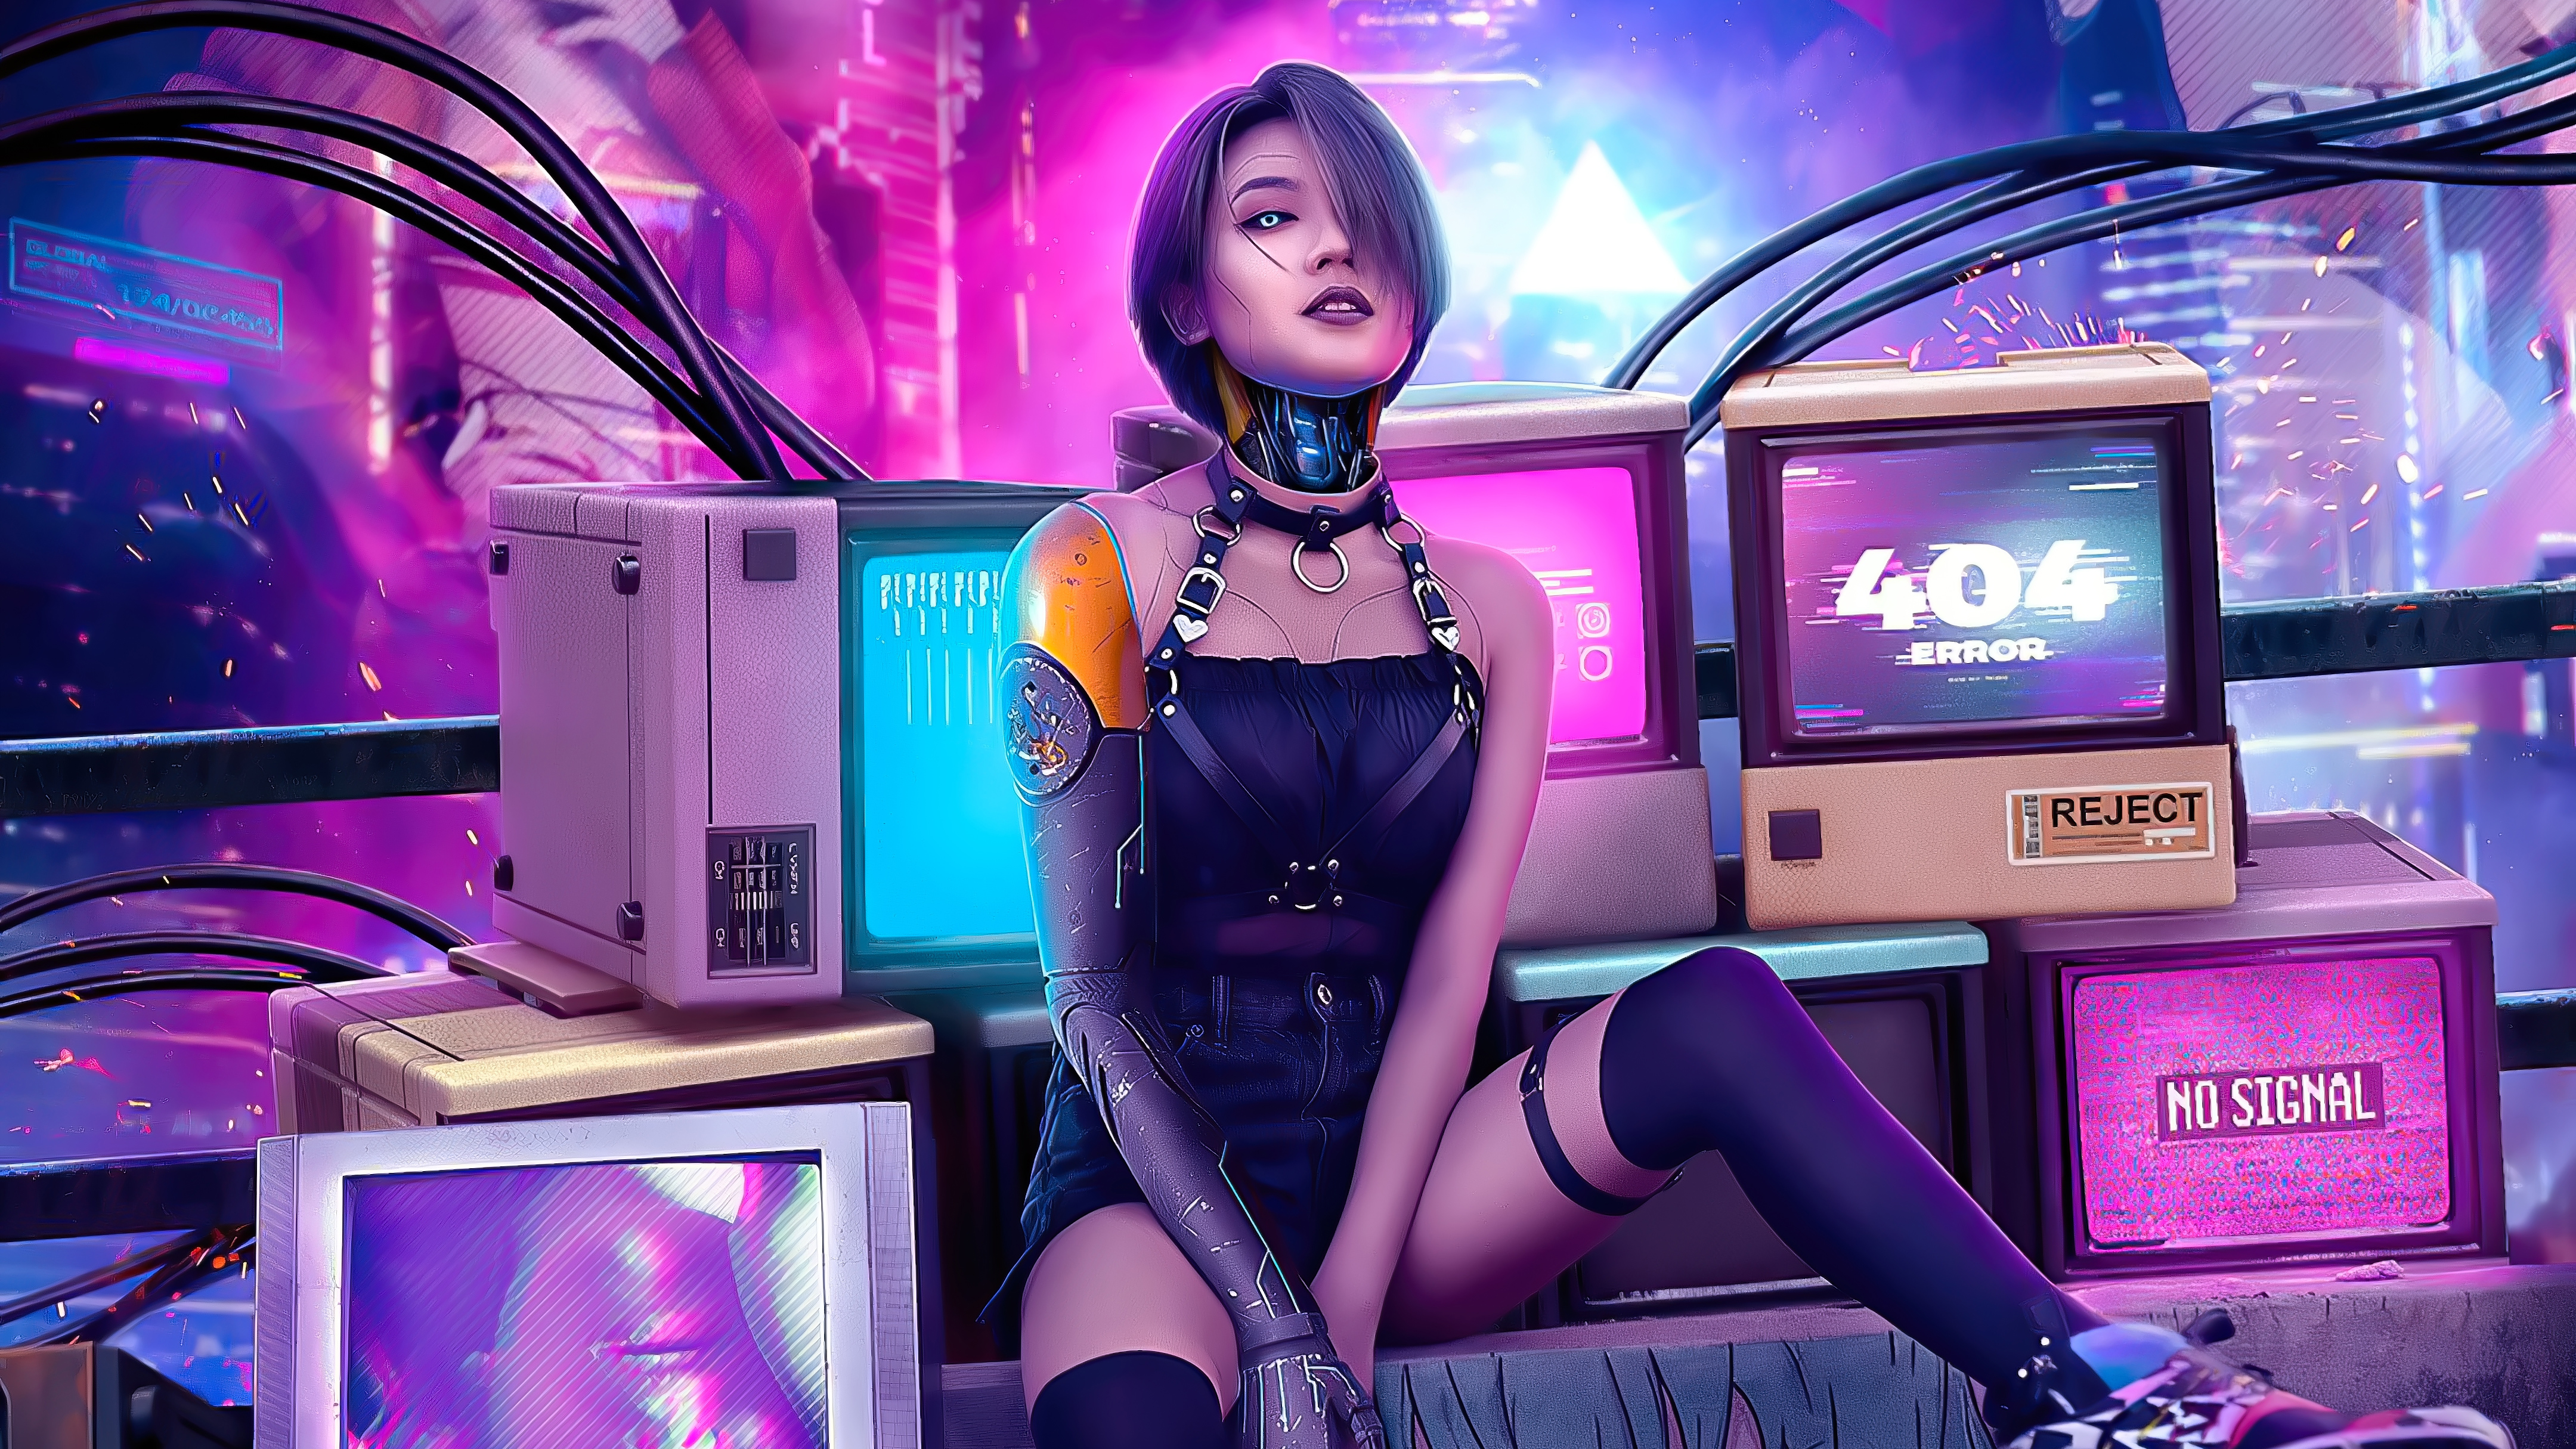 Cyberpunk Girl Retro Art 4k, HD Artist, 4k Wallpaper, Image, Background, Photo and Picture